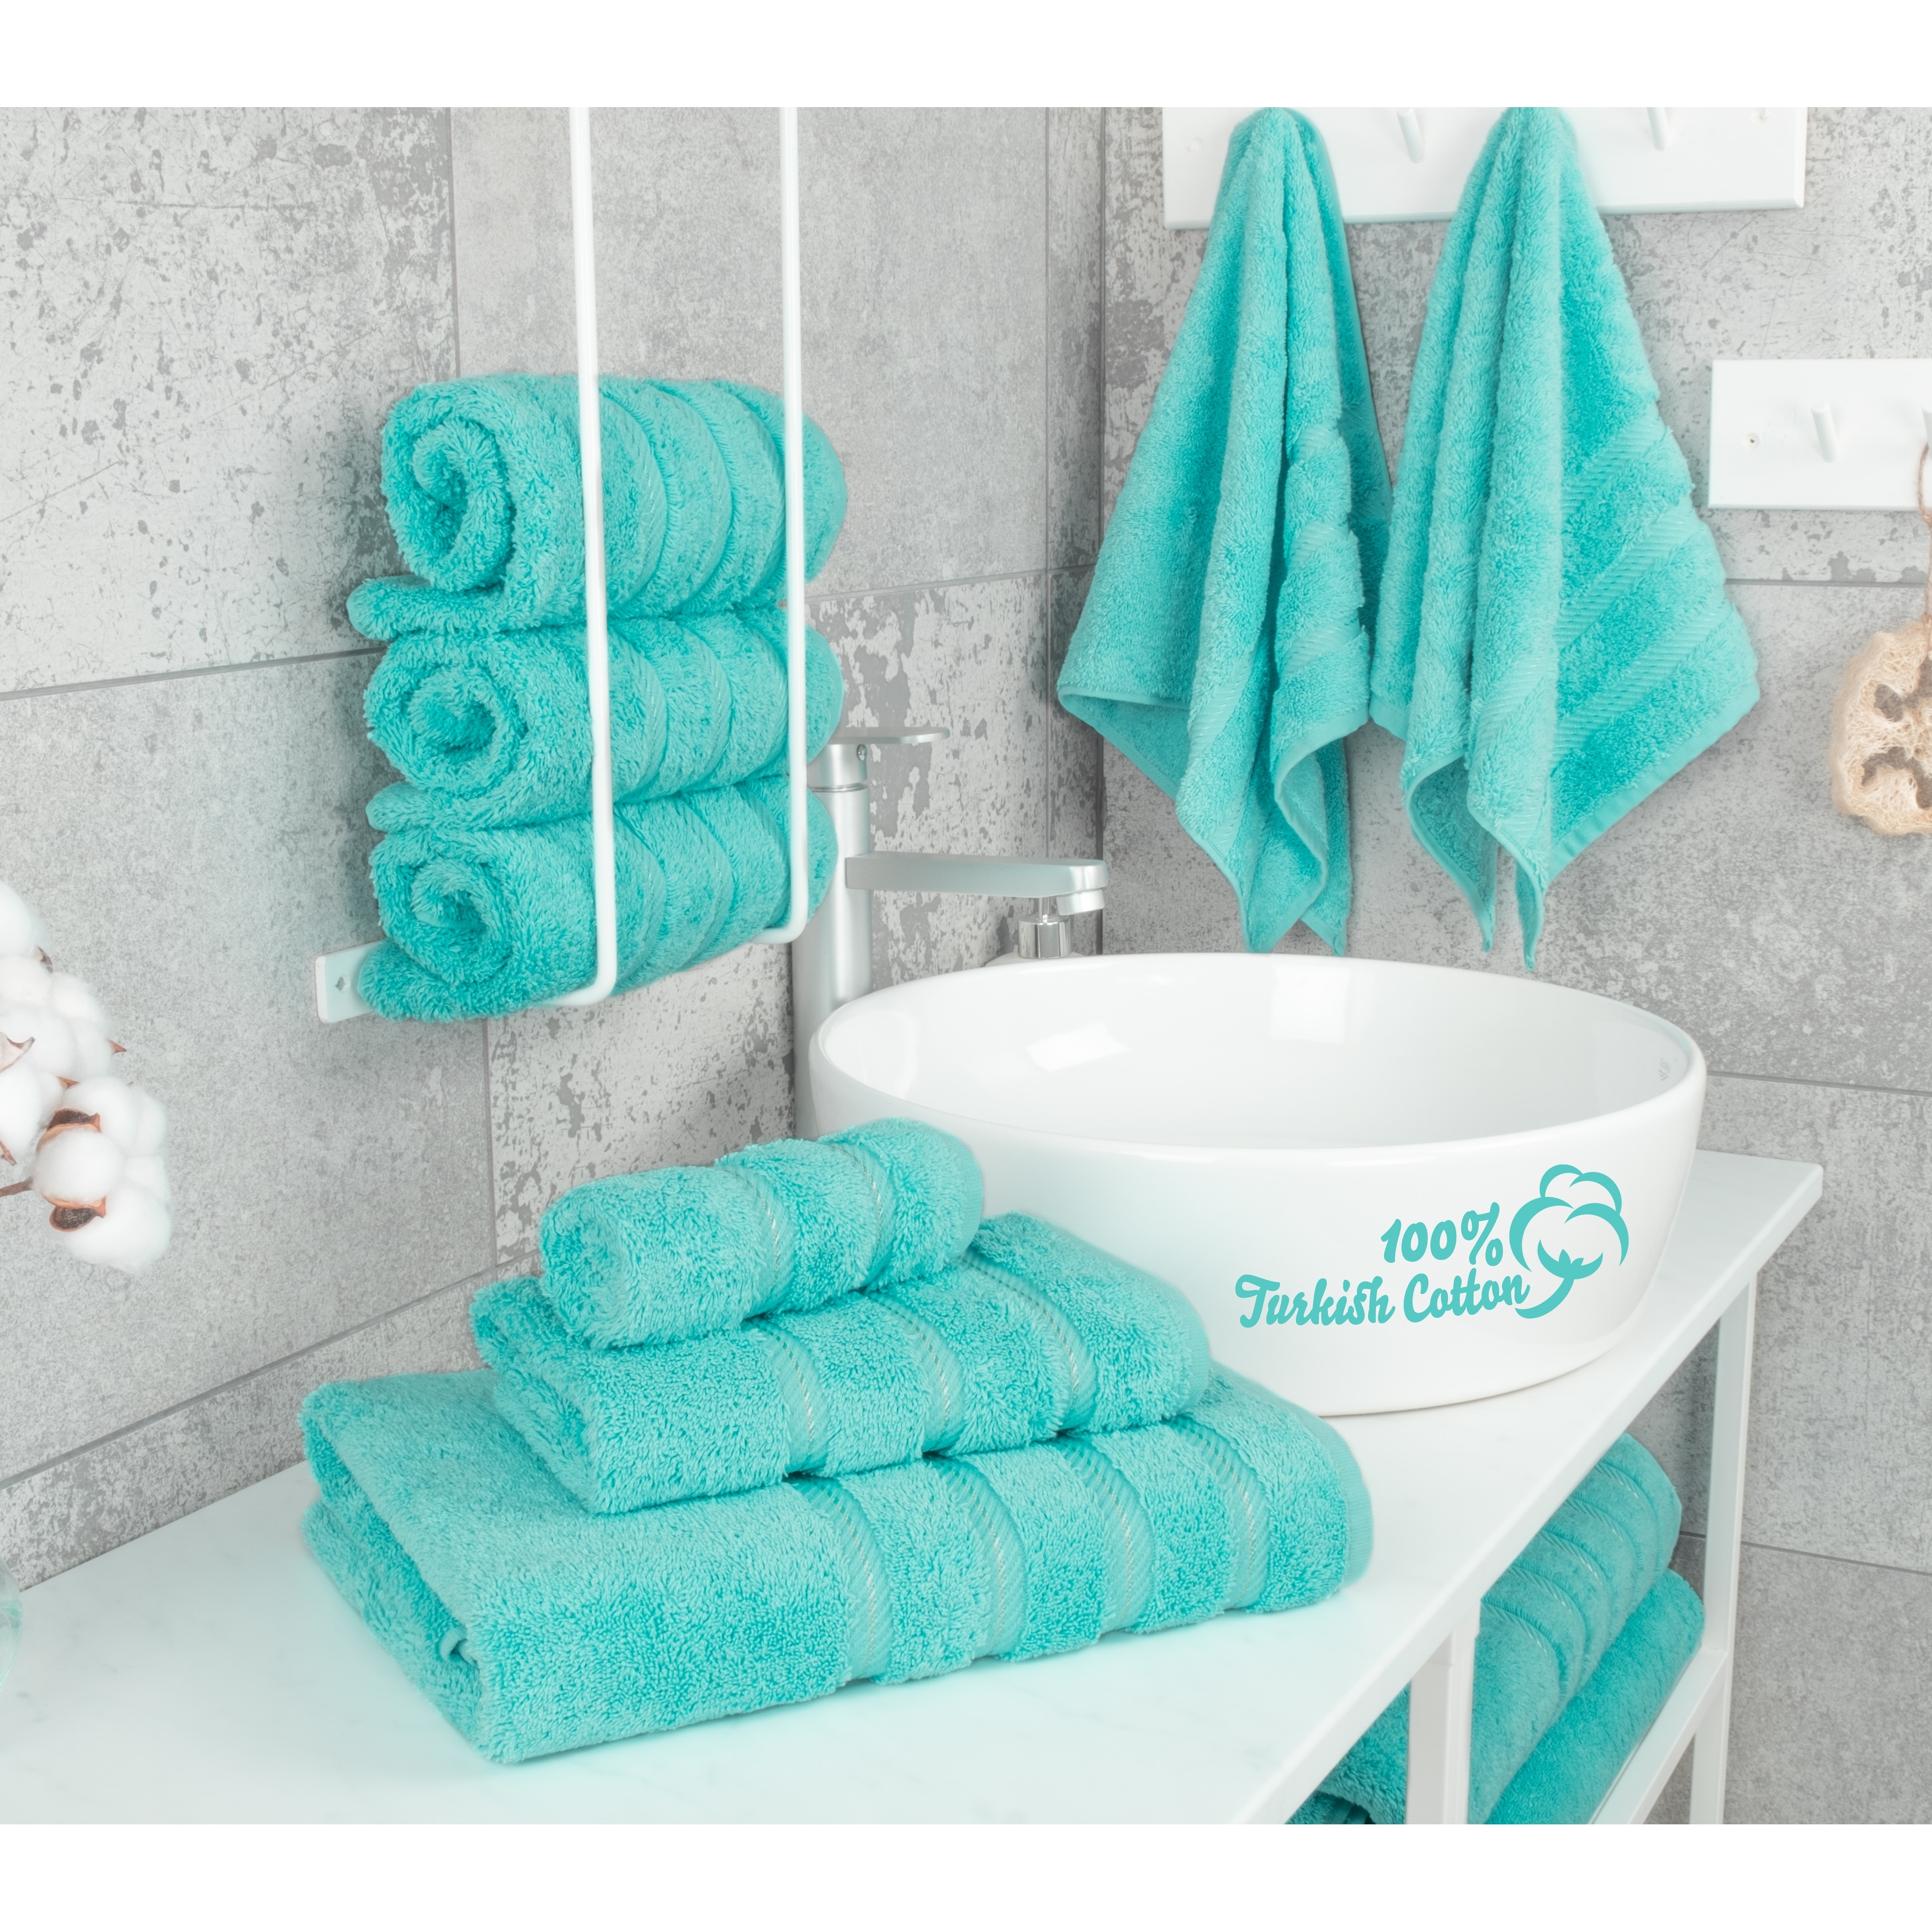 https://ak1.ostkcdn.com/images/products/is/images/direct/45c34f14032add9e40a686f81d59f27f3b188904/American-Soft-Linen-6-pc.-Turkish-Cotton-Towel-Set.jpg